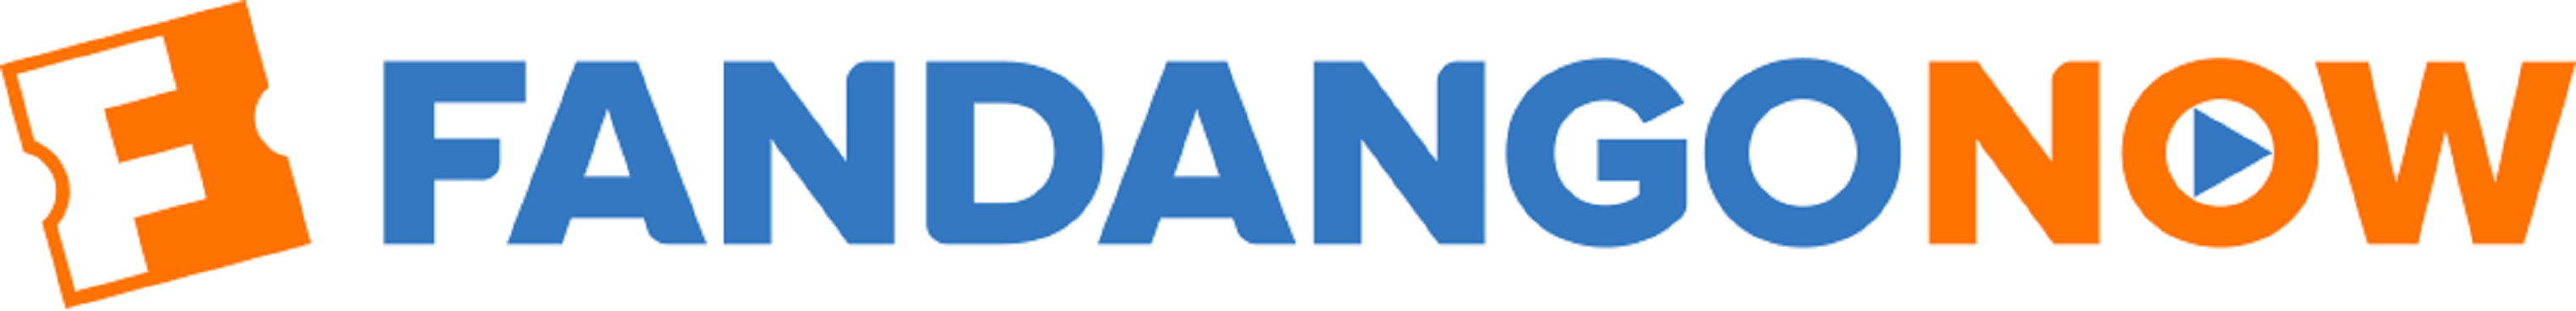 Fandango Now Logo - Fandango to Launch Premium Video Service This Month | Den of Geek